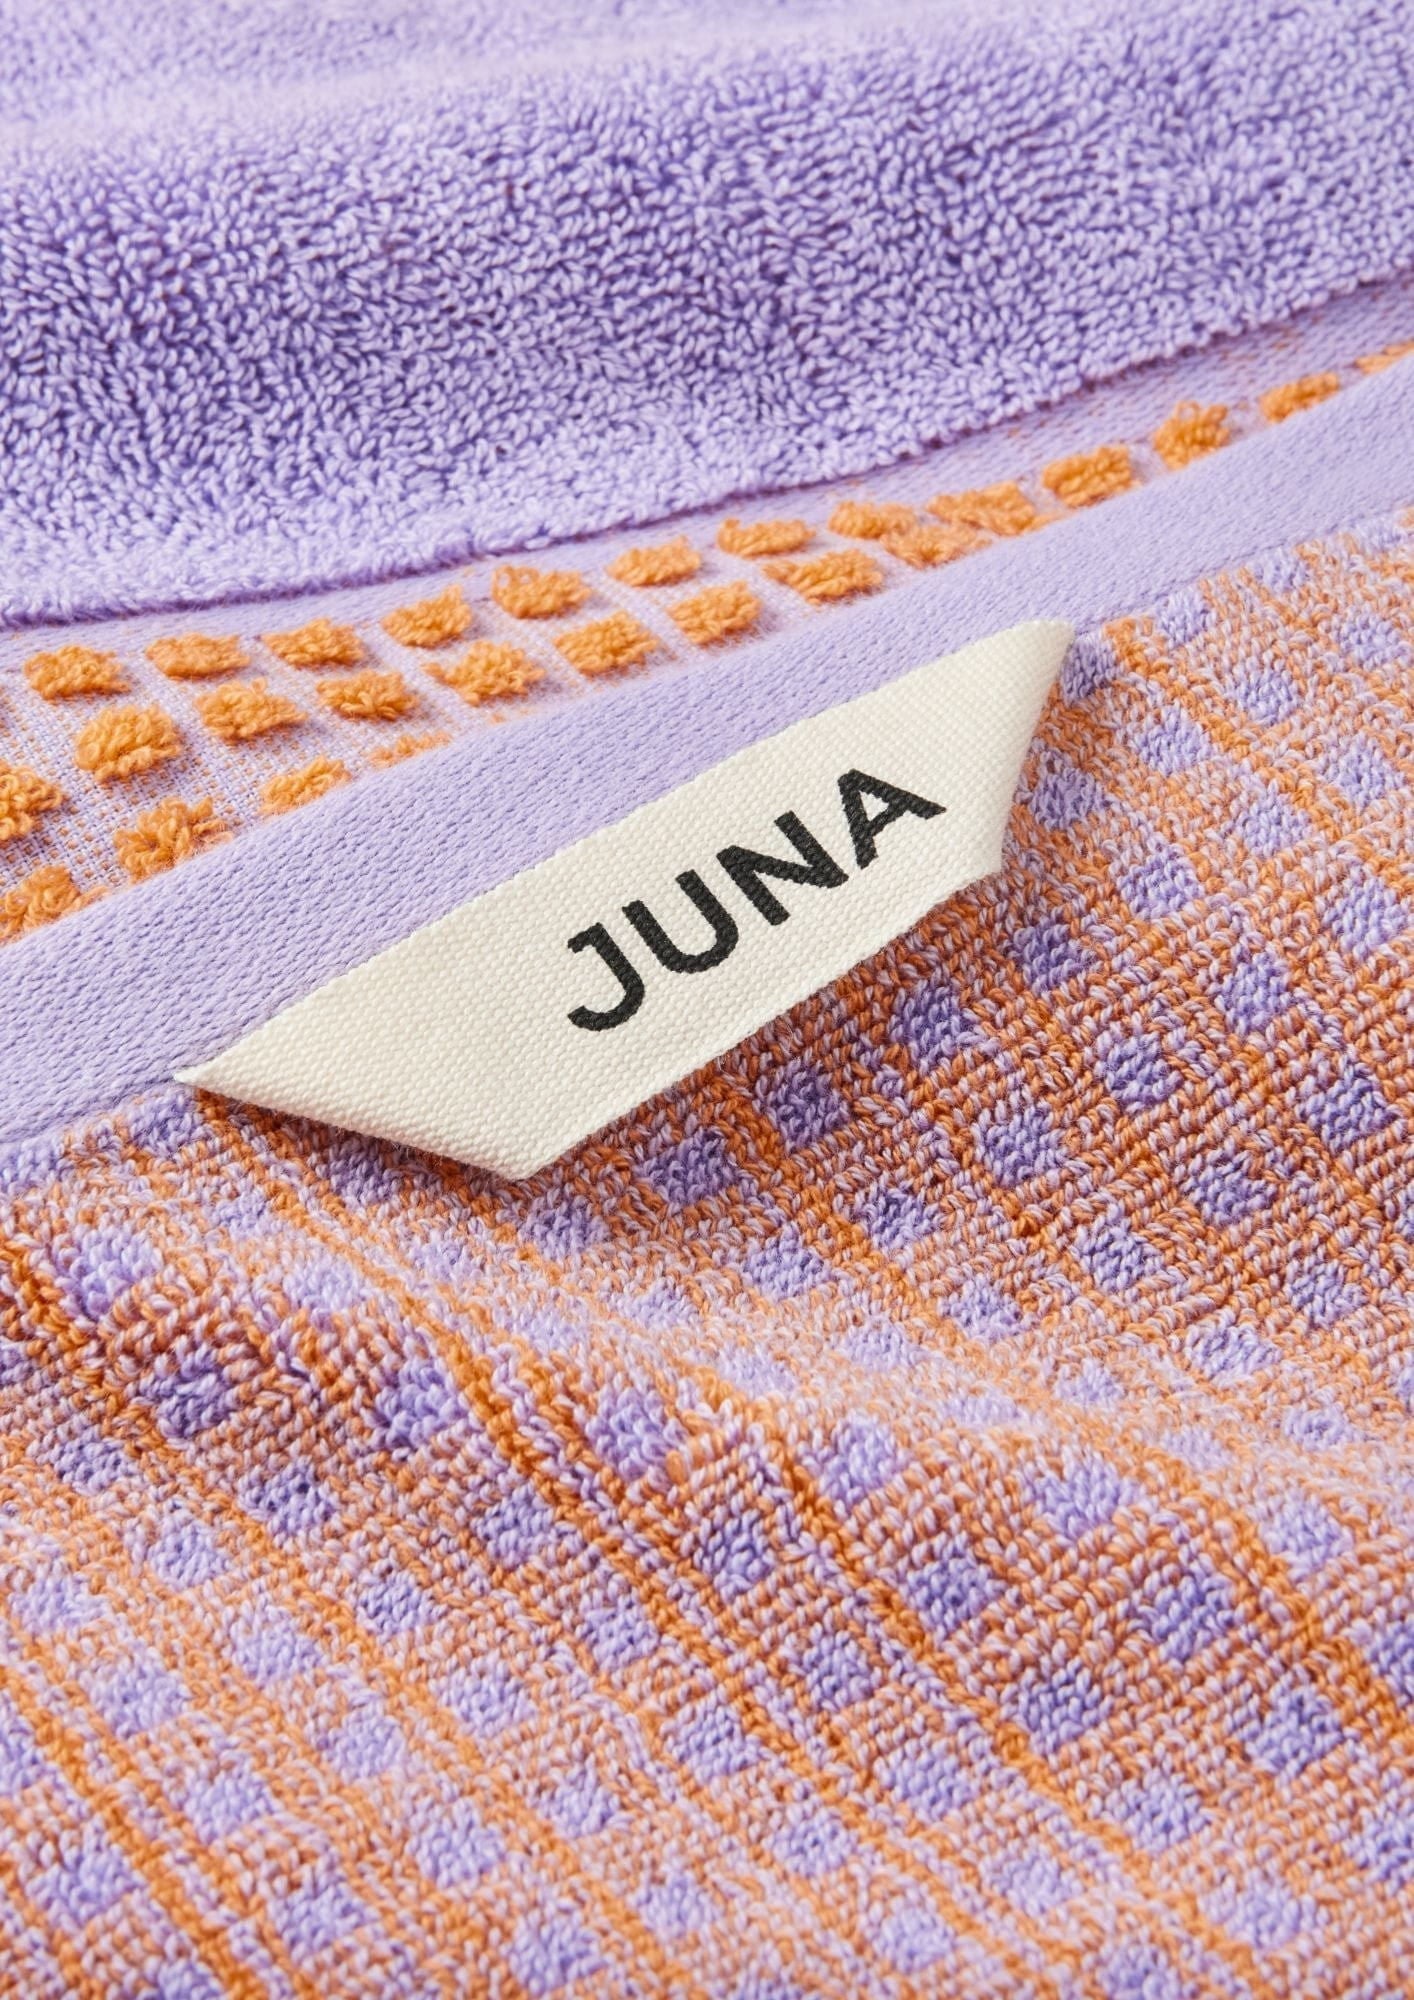 JUNA Kontrollera handduken 70x140 cm, lavendel/persika